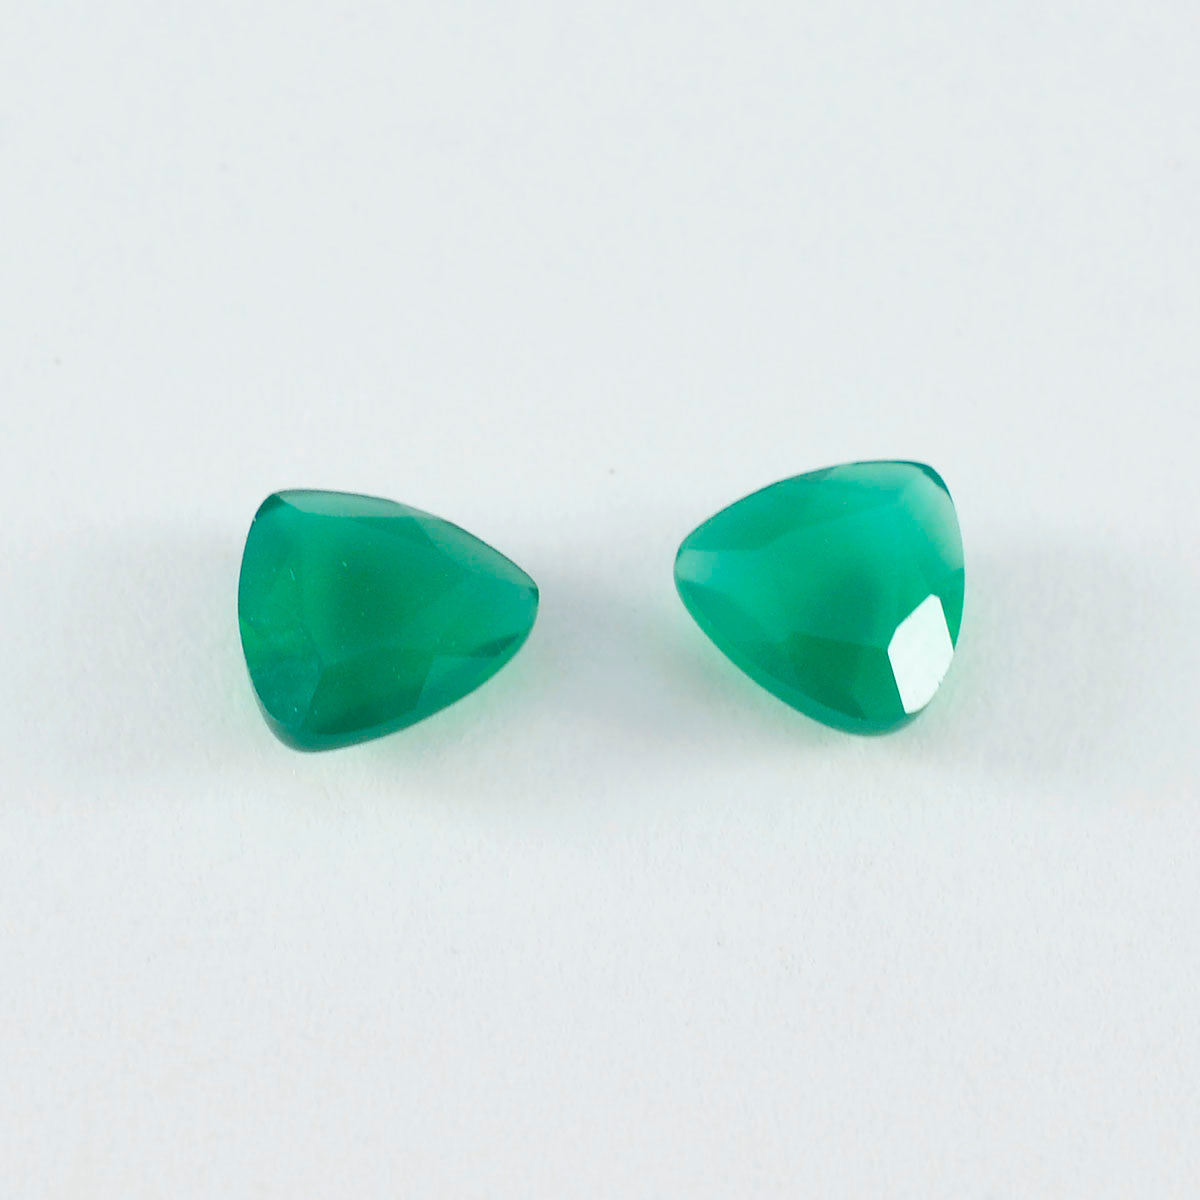 Riyogems 1PC Real Green Onyx Faceted 10x10 mm Trillion Shape superb Quality Gemstone